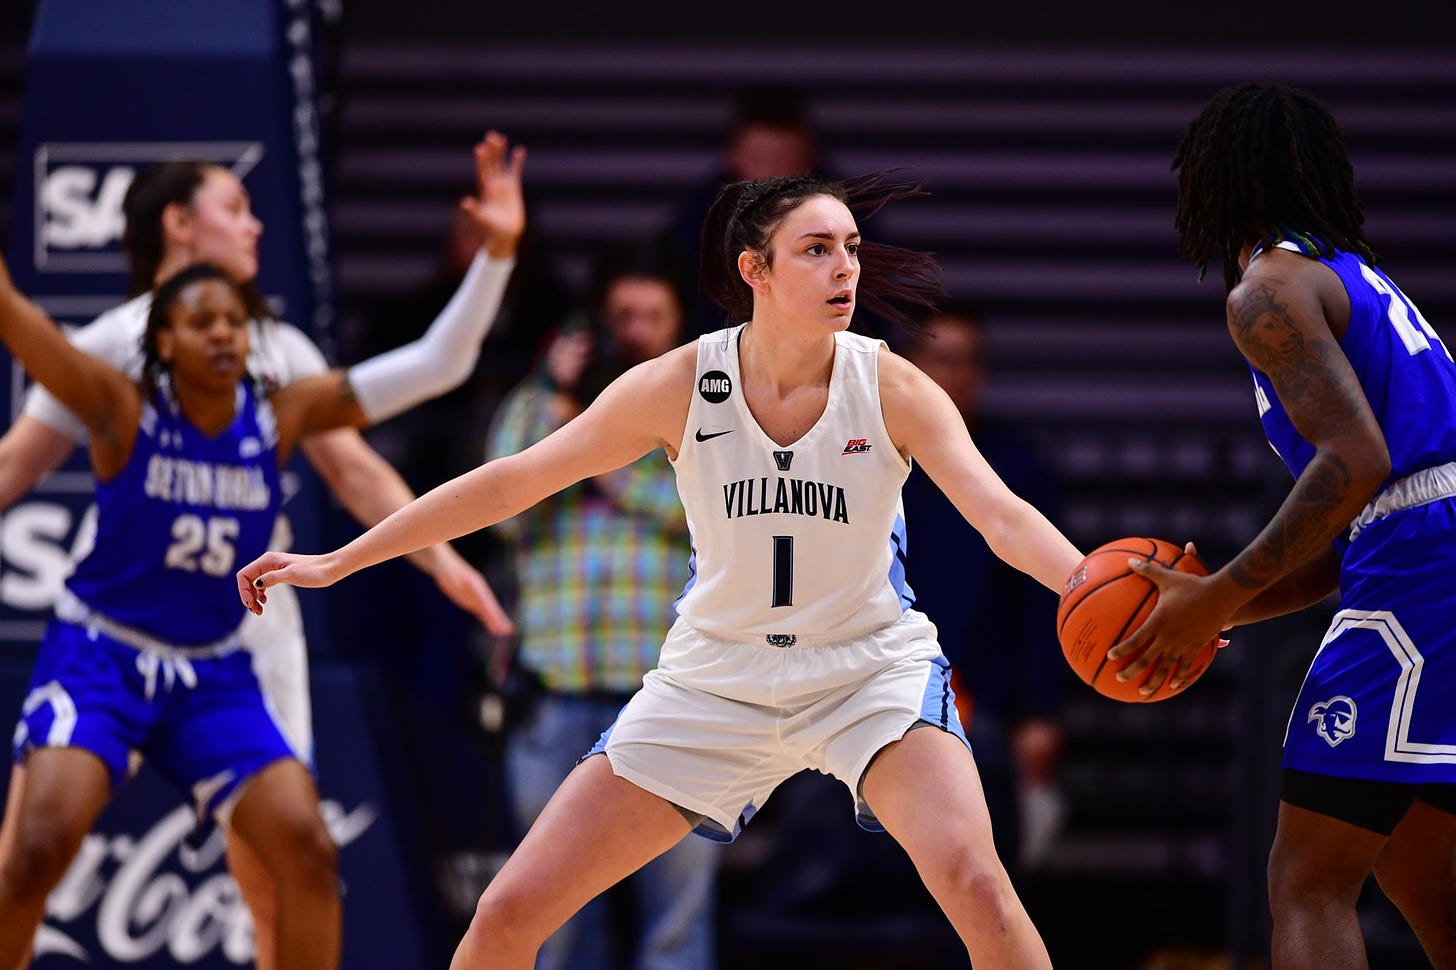 Bridget Herlihy - Women's Basketball - Villanova University